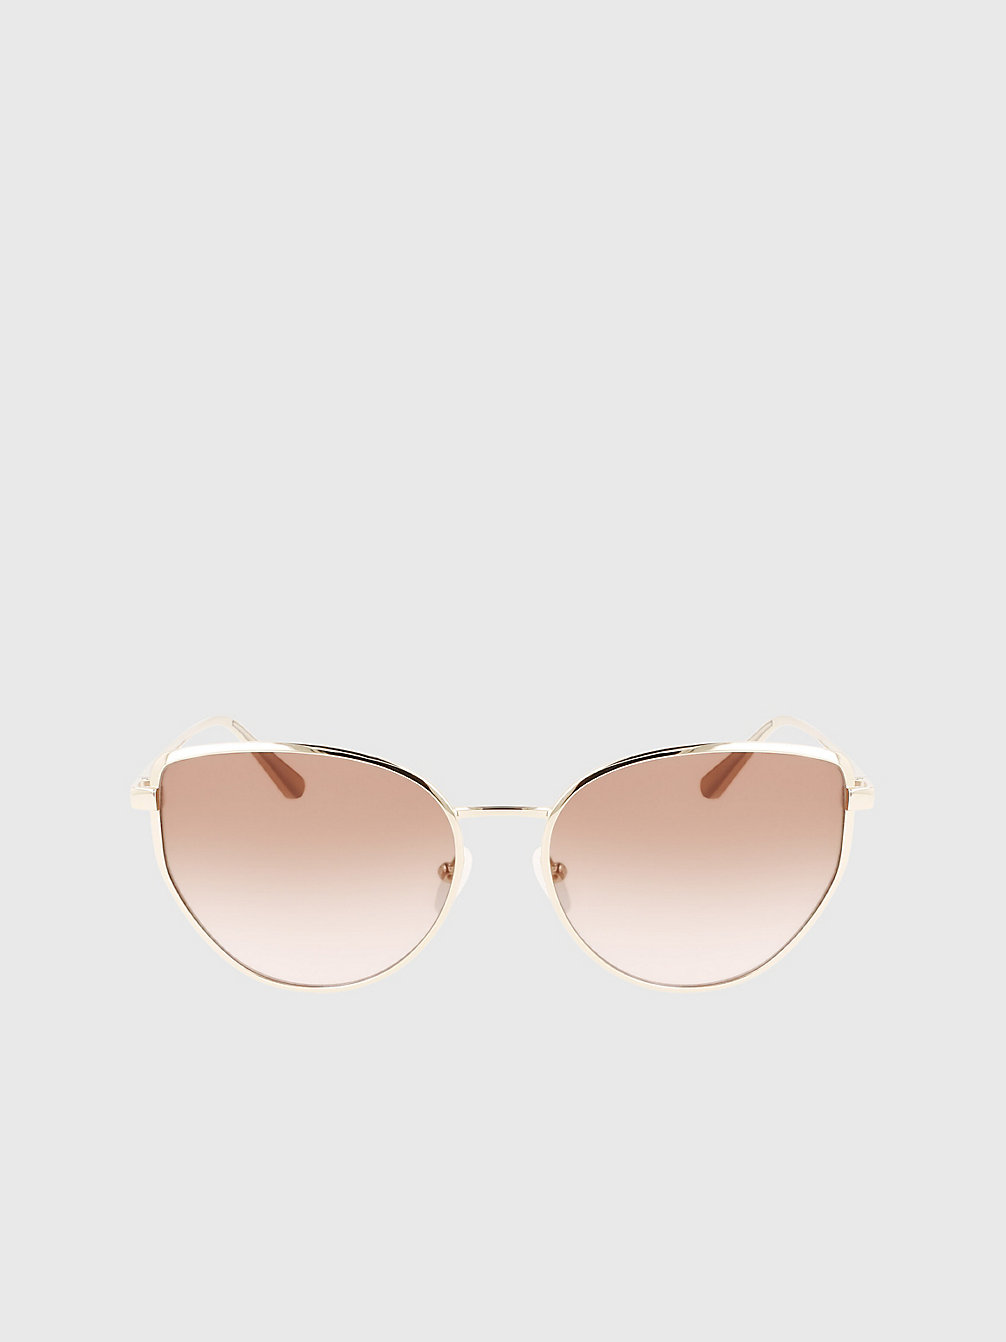 GOLD/BLUSH > Прямоугольные солнцезащитные очки Ck22113s > undefined Женщины - Calvin Klein